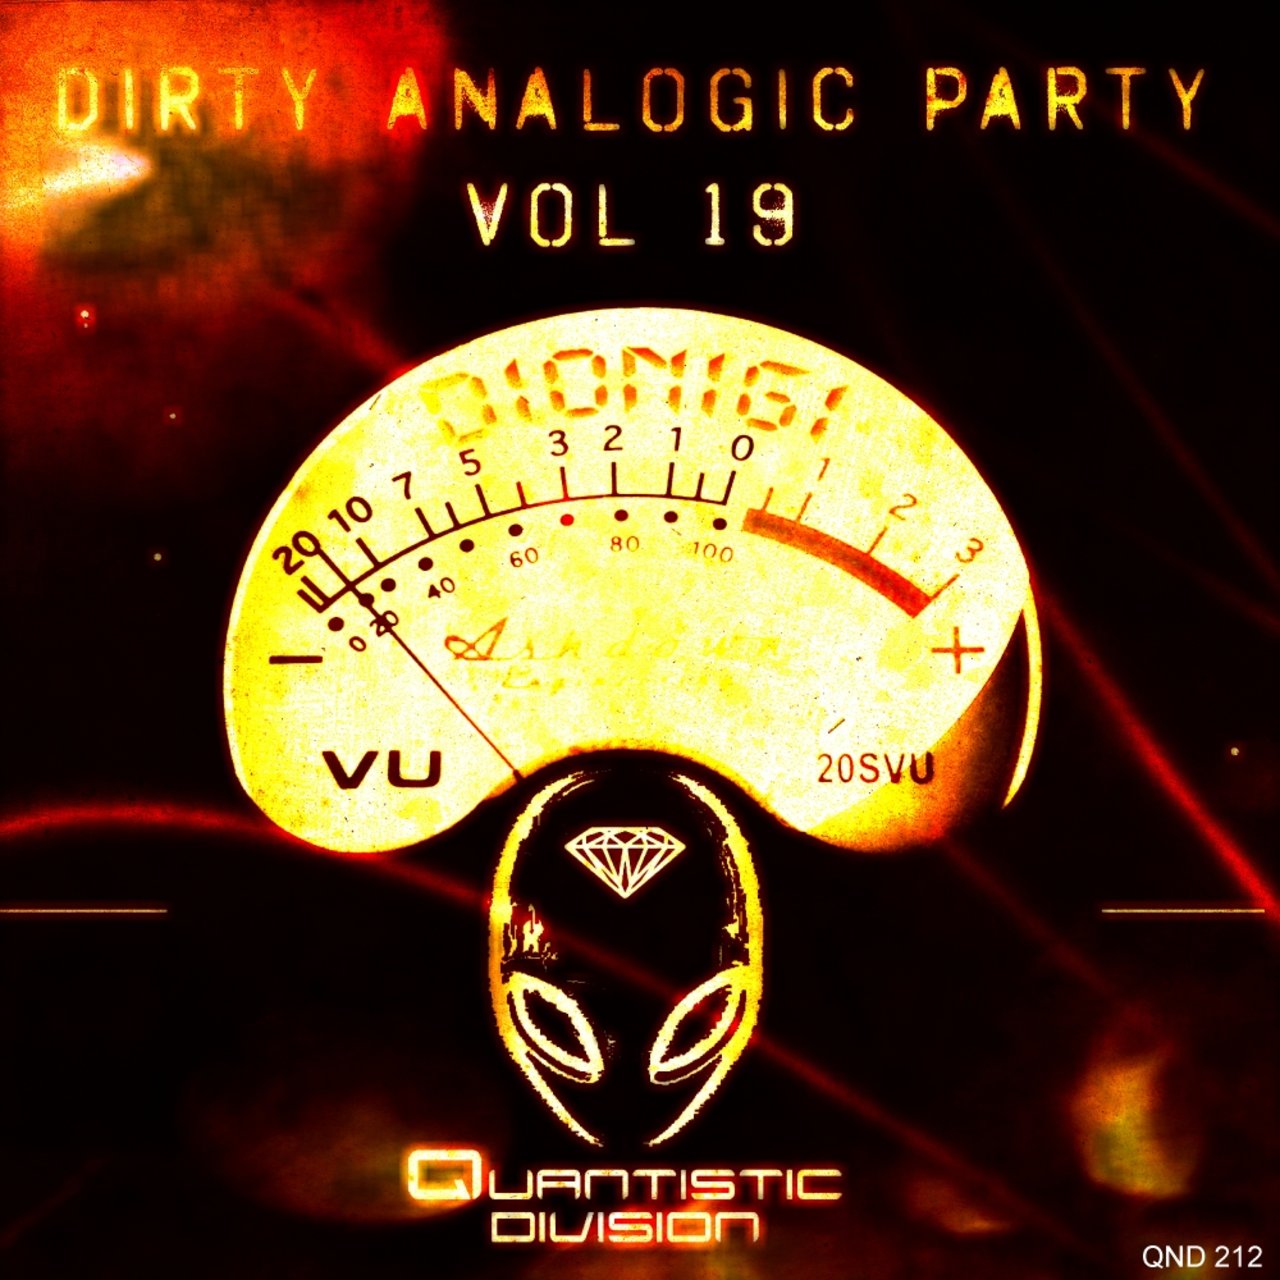 Dionigi - Dirty Analogic Party, Vol. 19 / Quantistic Division